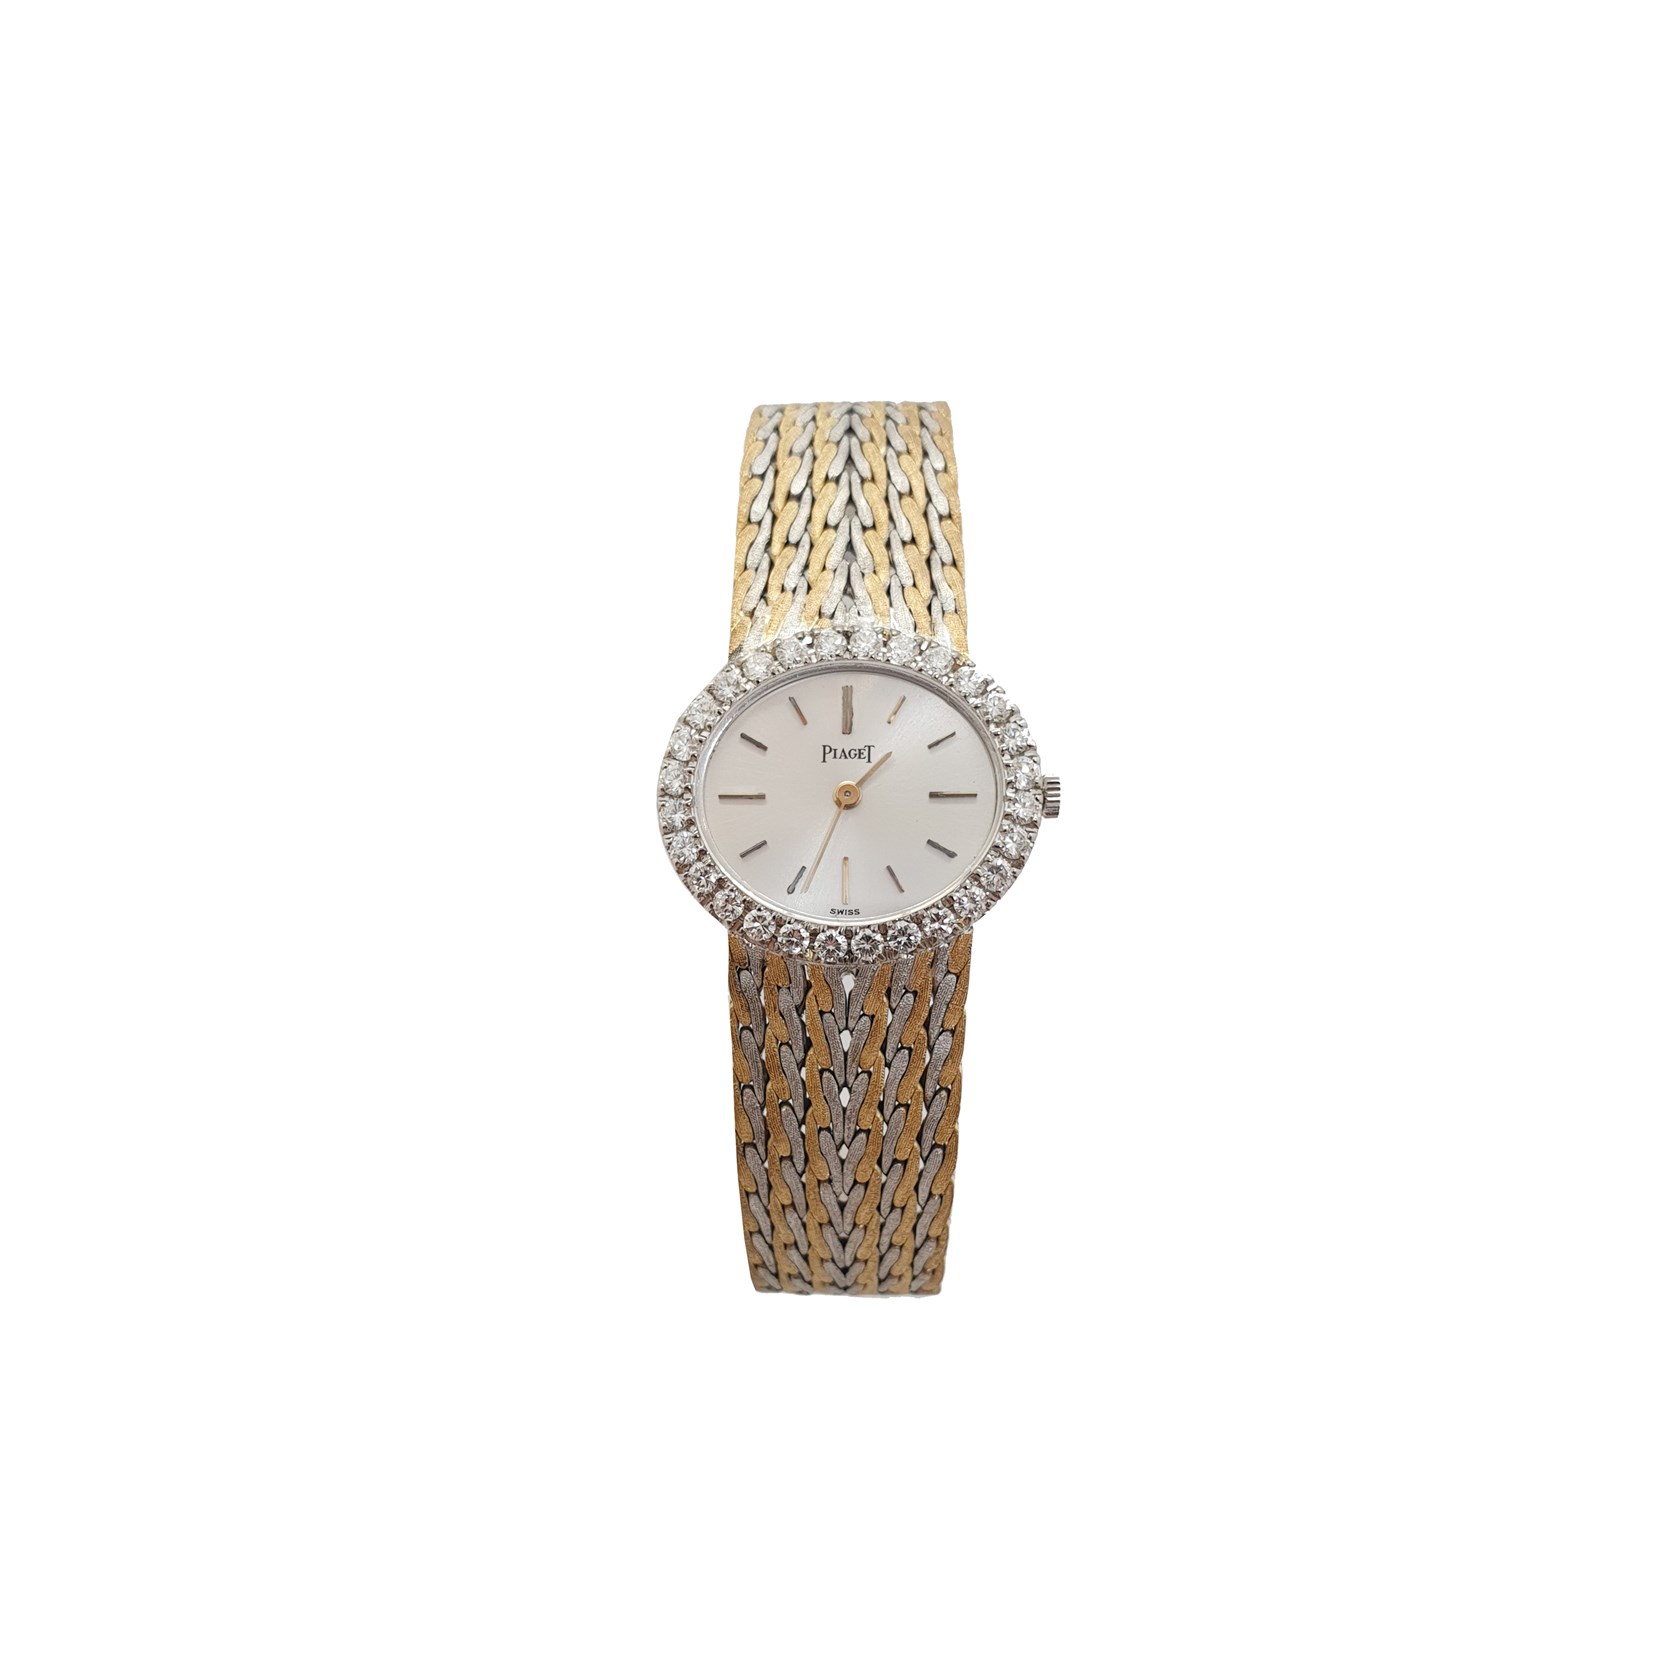 Piaget Ladies Vintage Watch - Two Toned